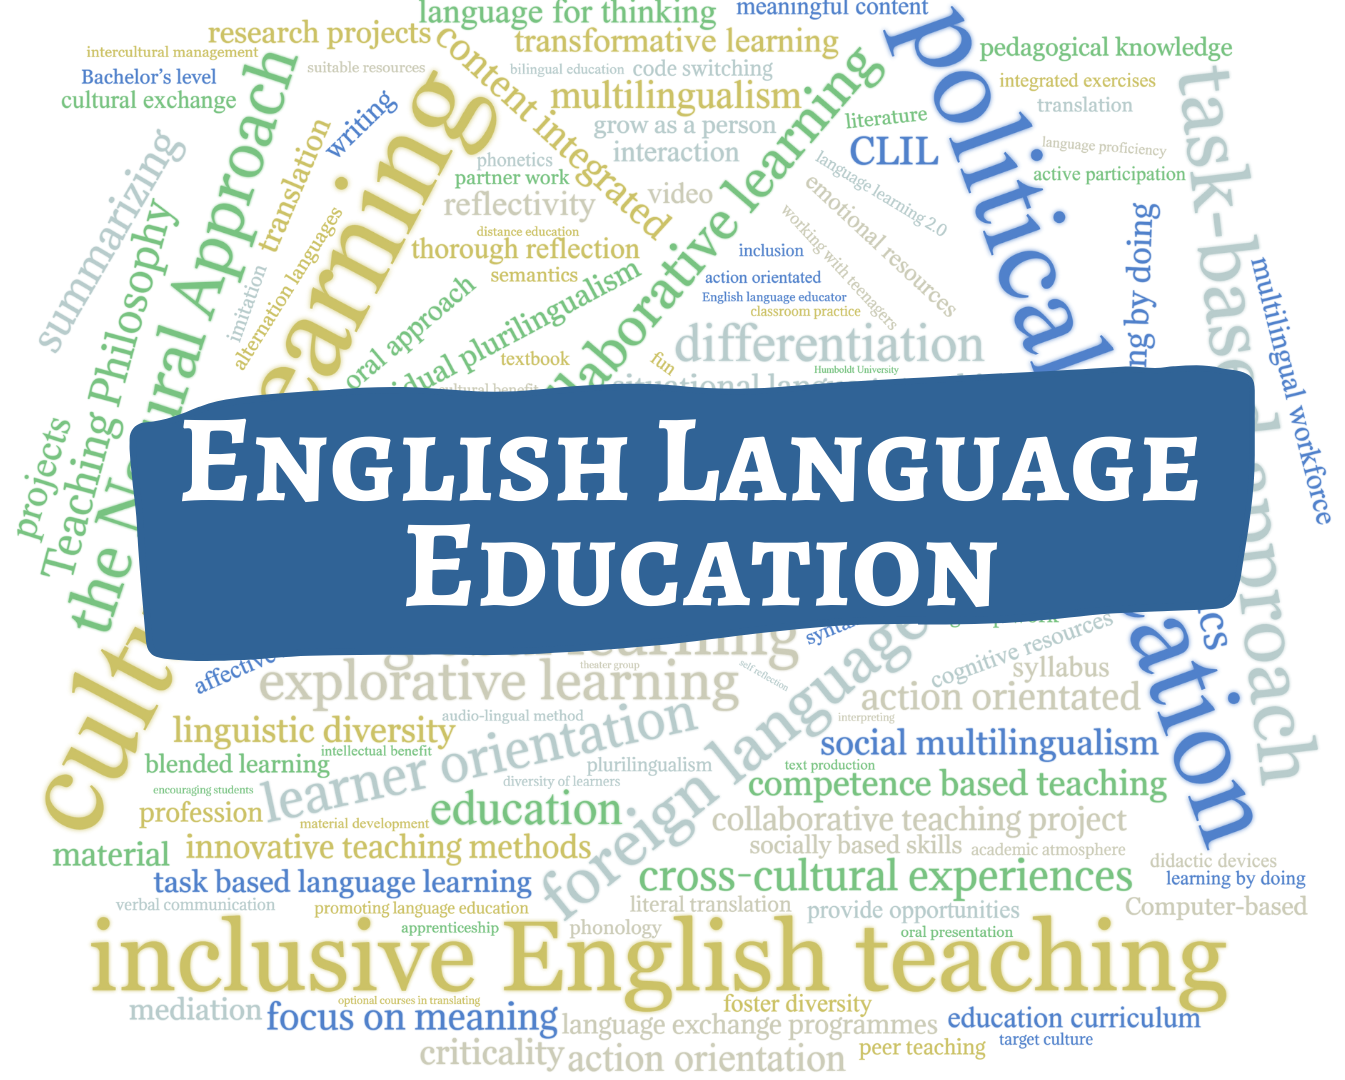 English Language Education final 1.png